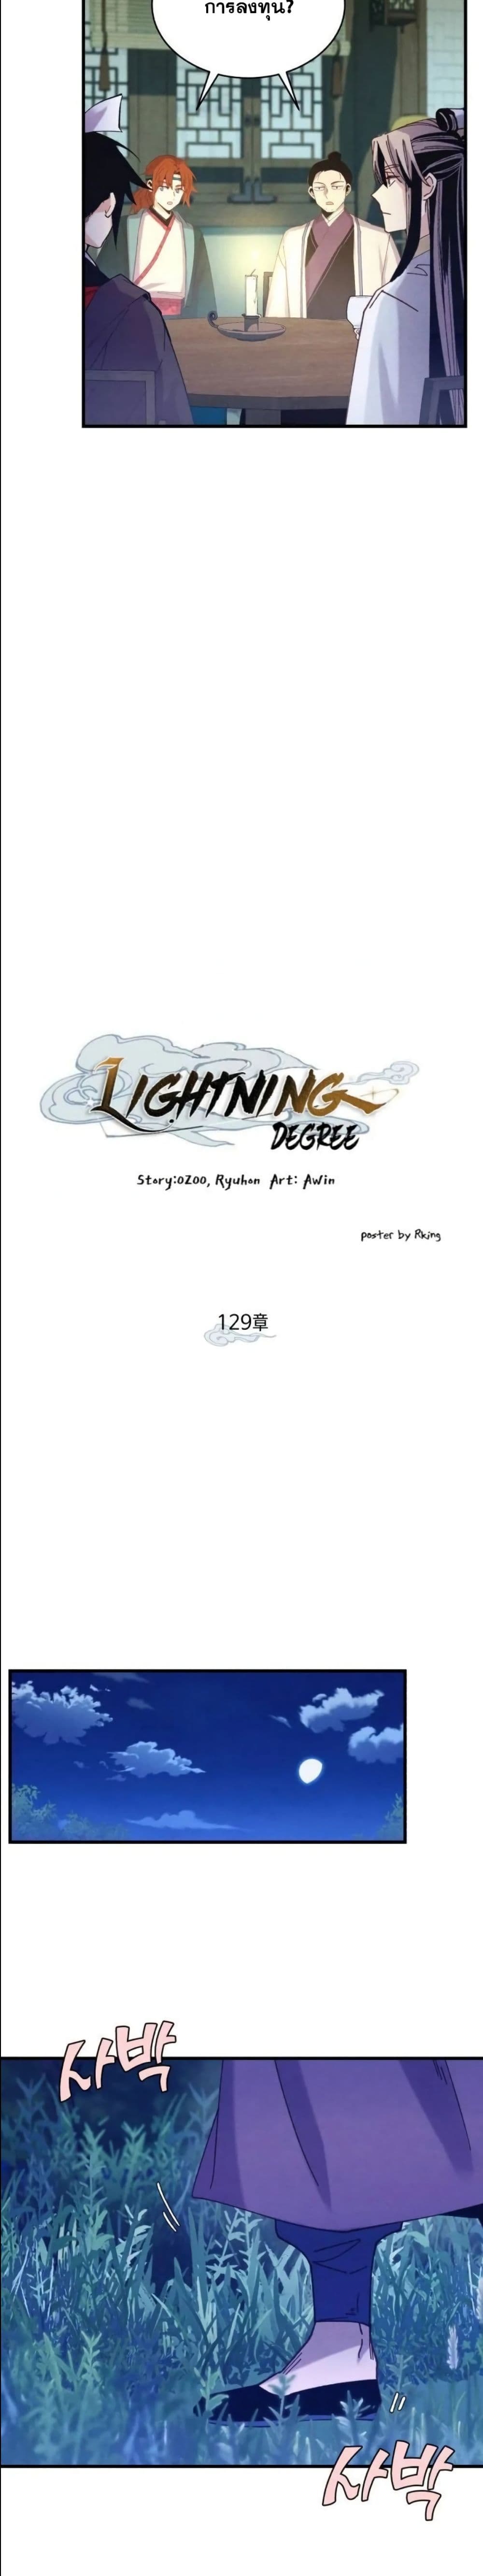 Lightning Degree 129-129